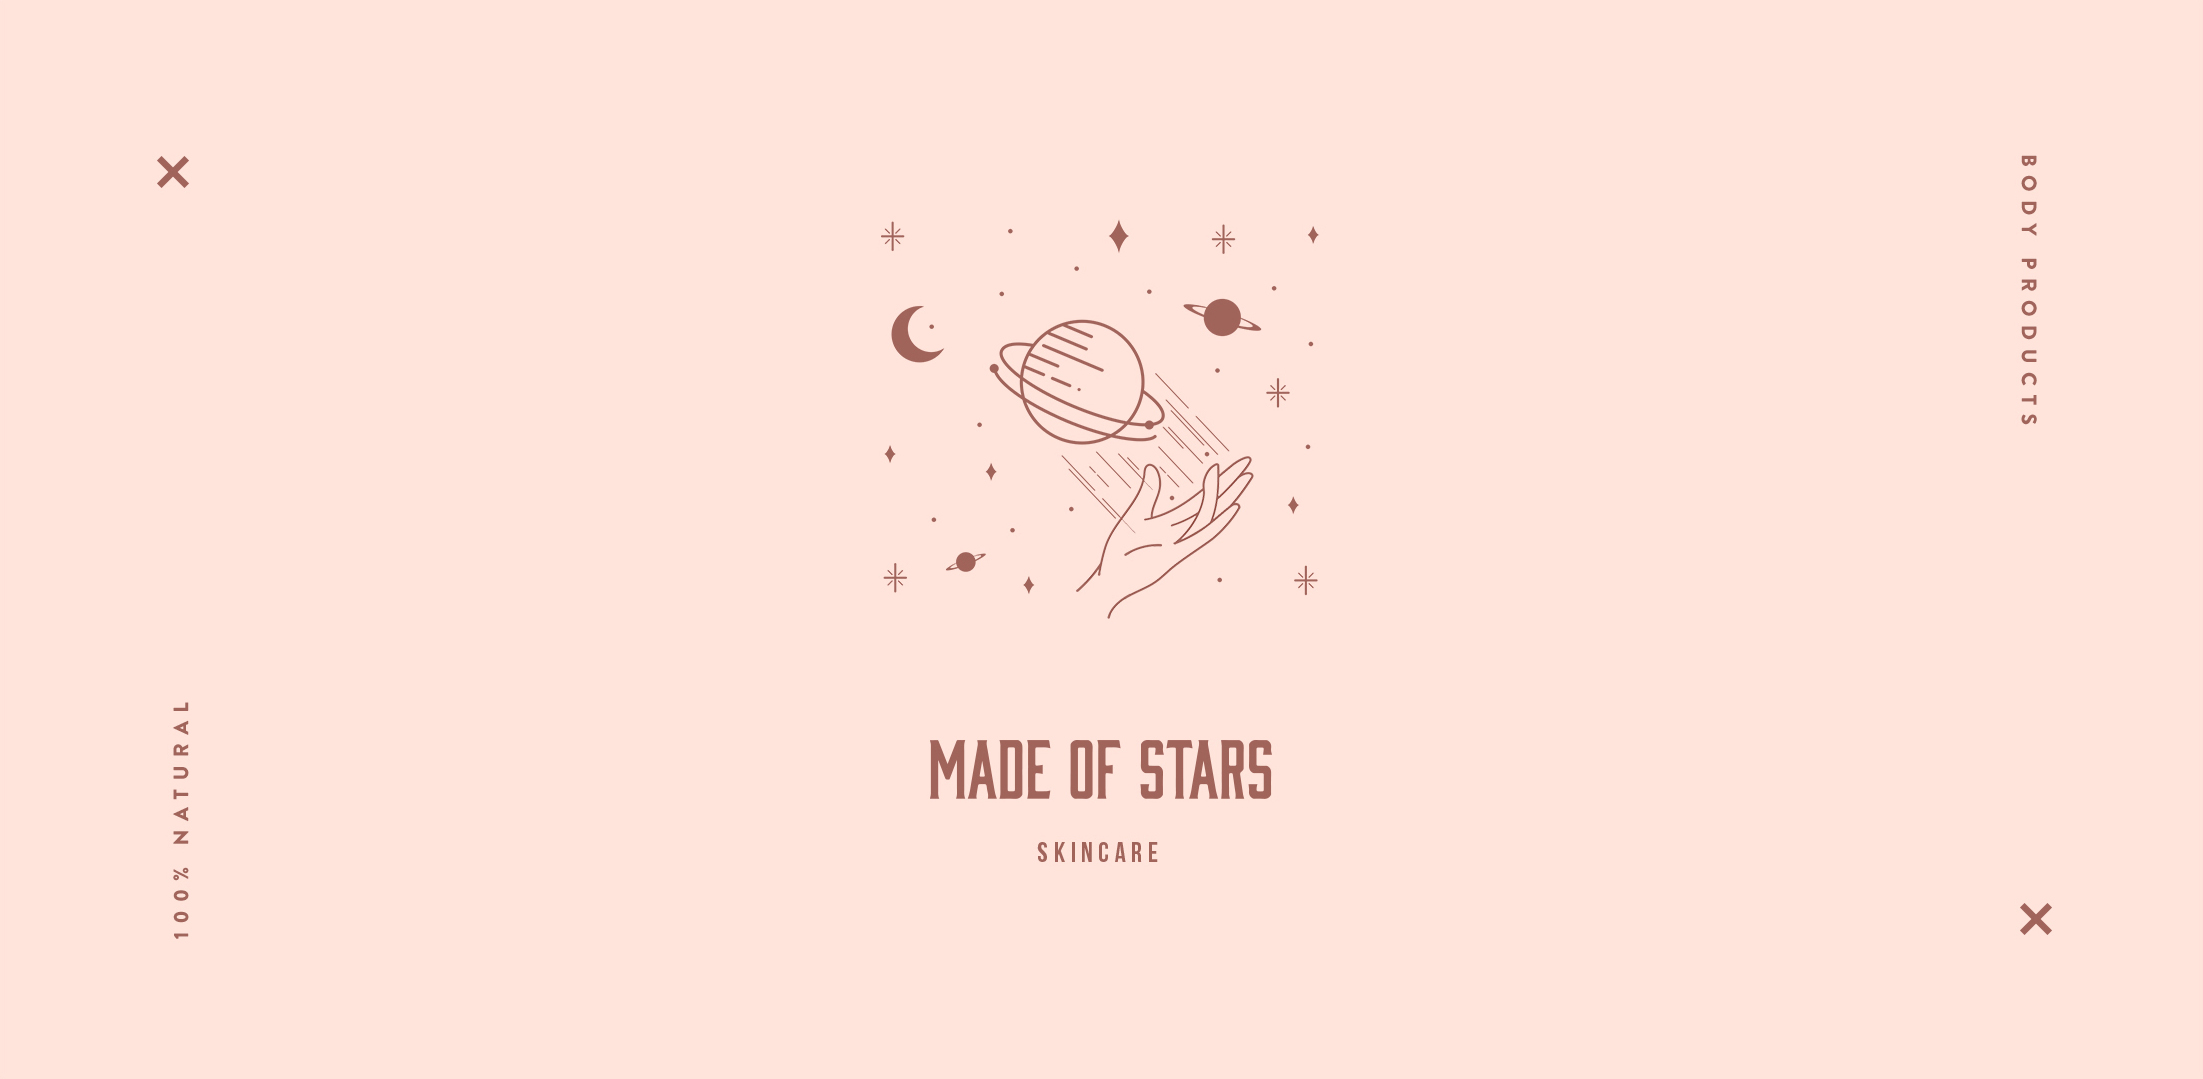 Made of stars